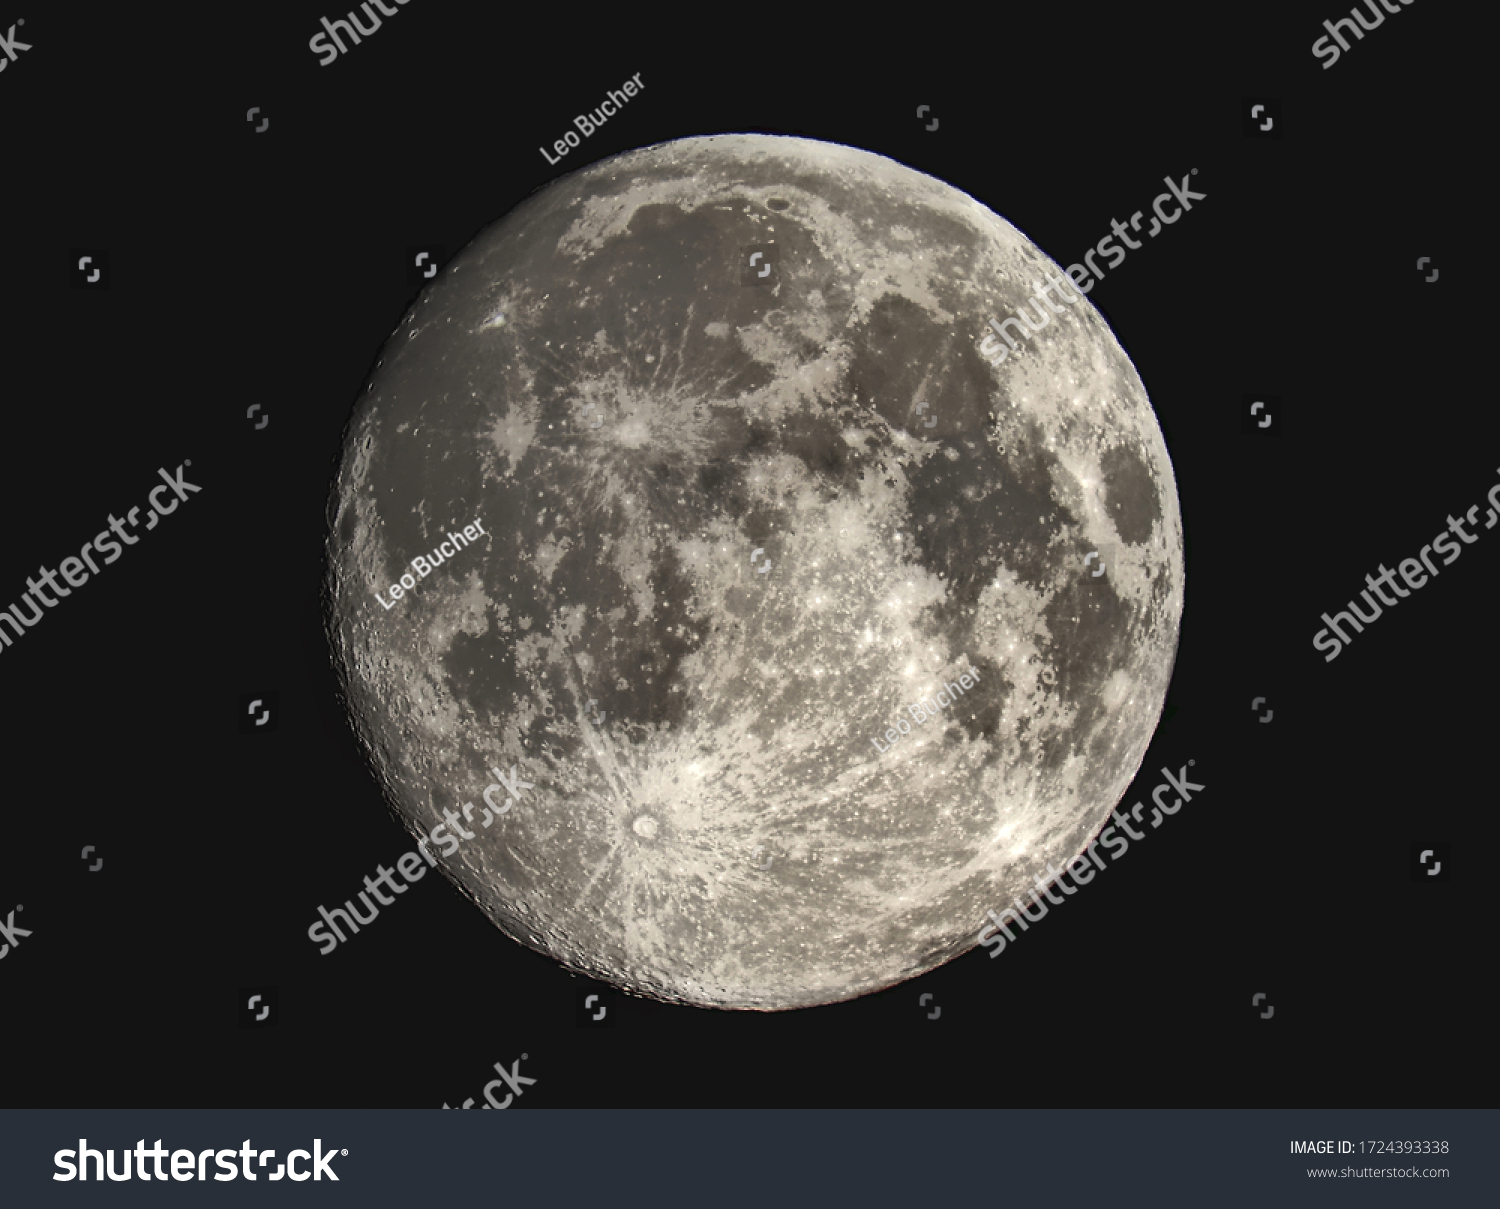 Very detailed full moon photo #1724393338